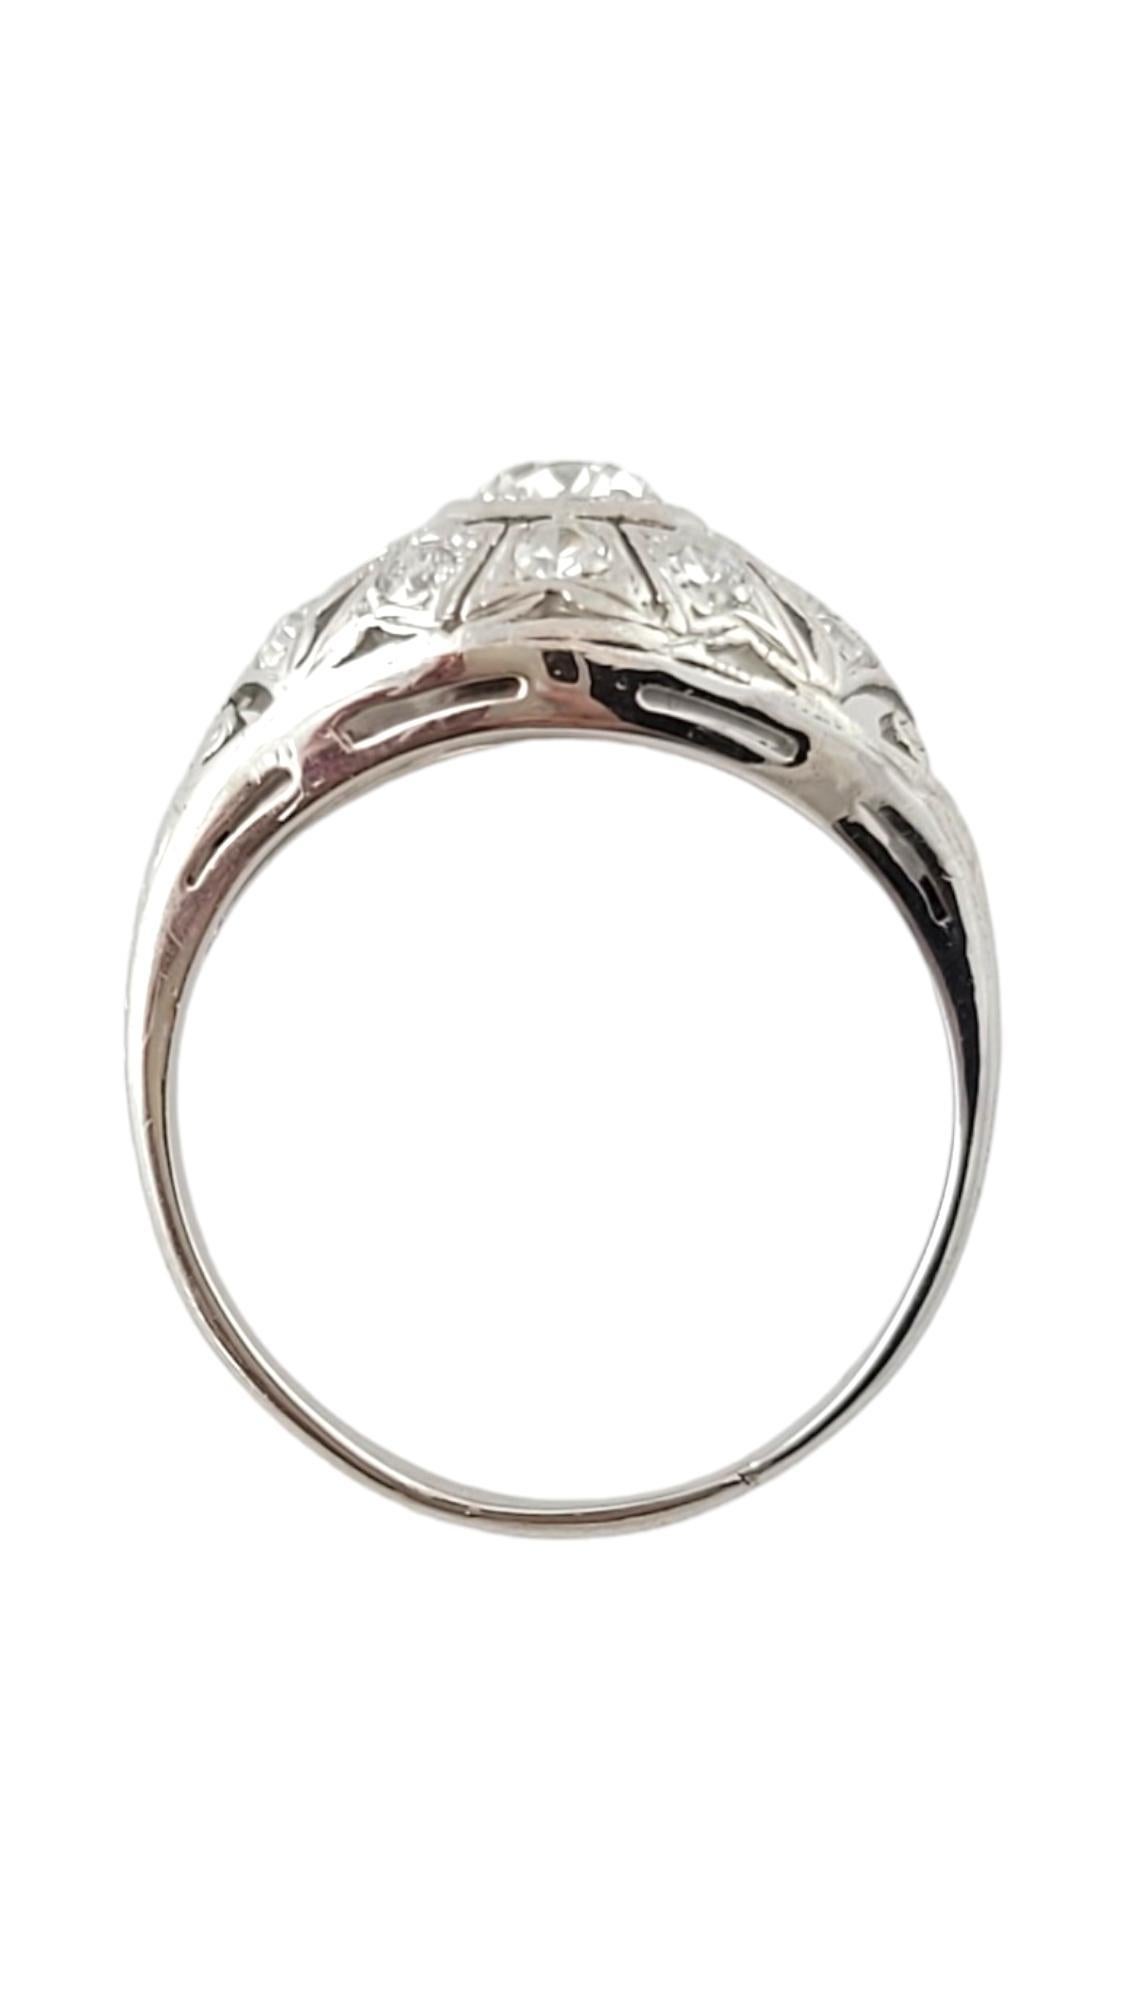 Round Cut 18 Karat White Gold Diamond Ring Size 5.75 #16827 For Sale